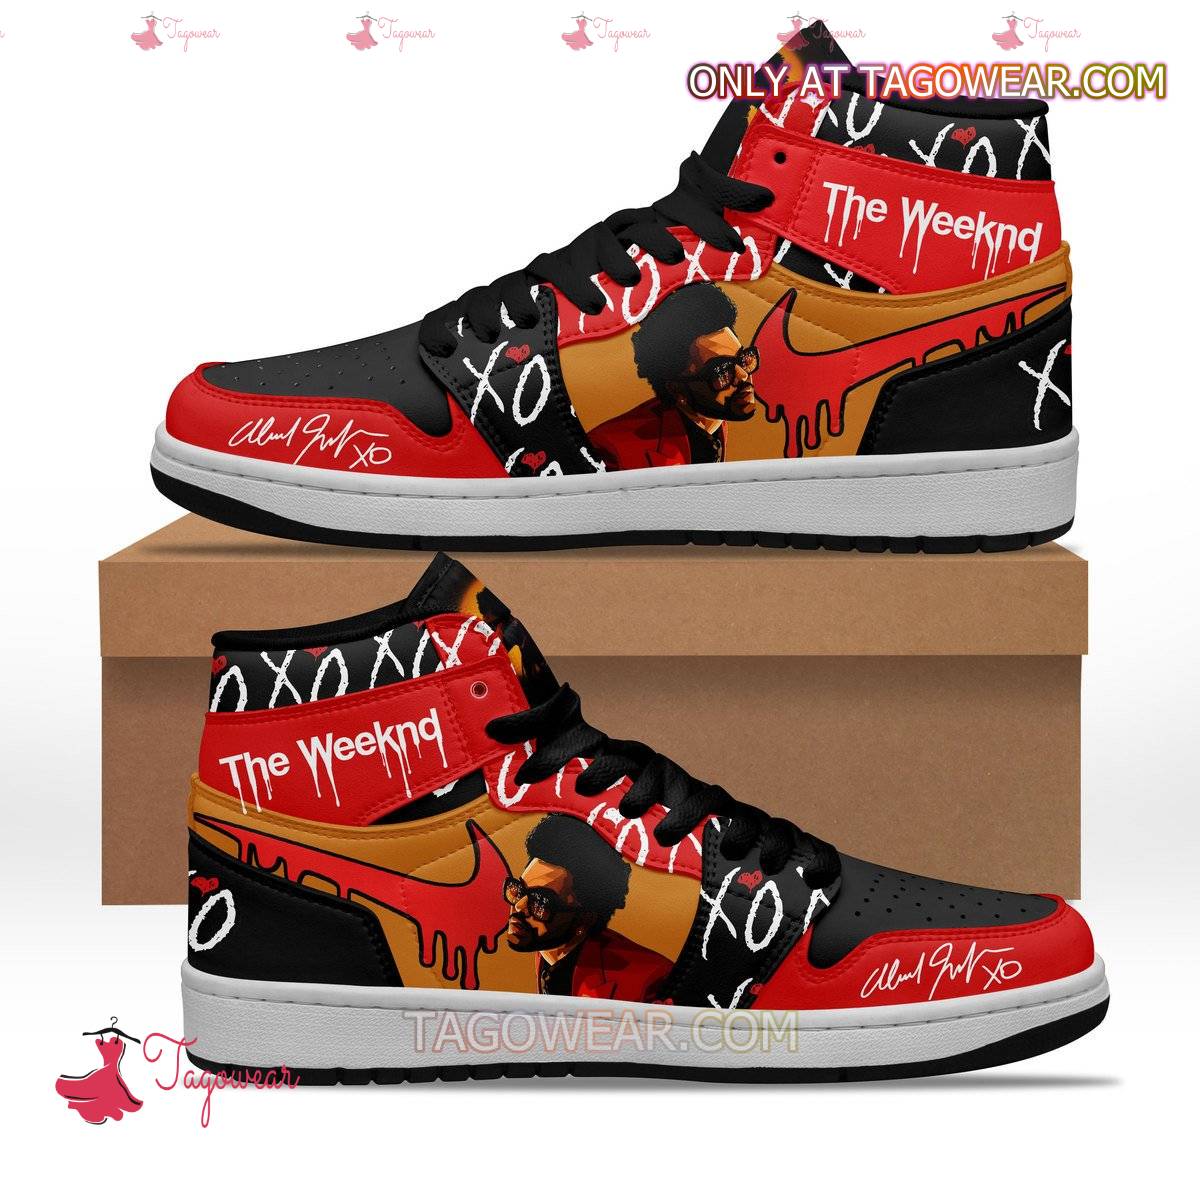 The Weeknd Signature Xo Air Jordan High Top Shoes